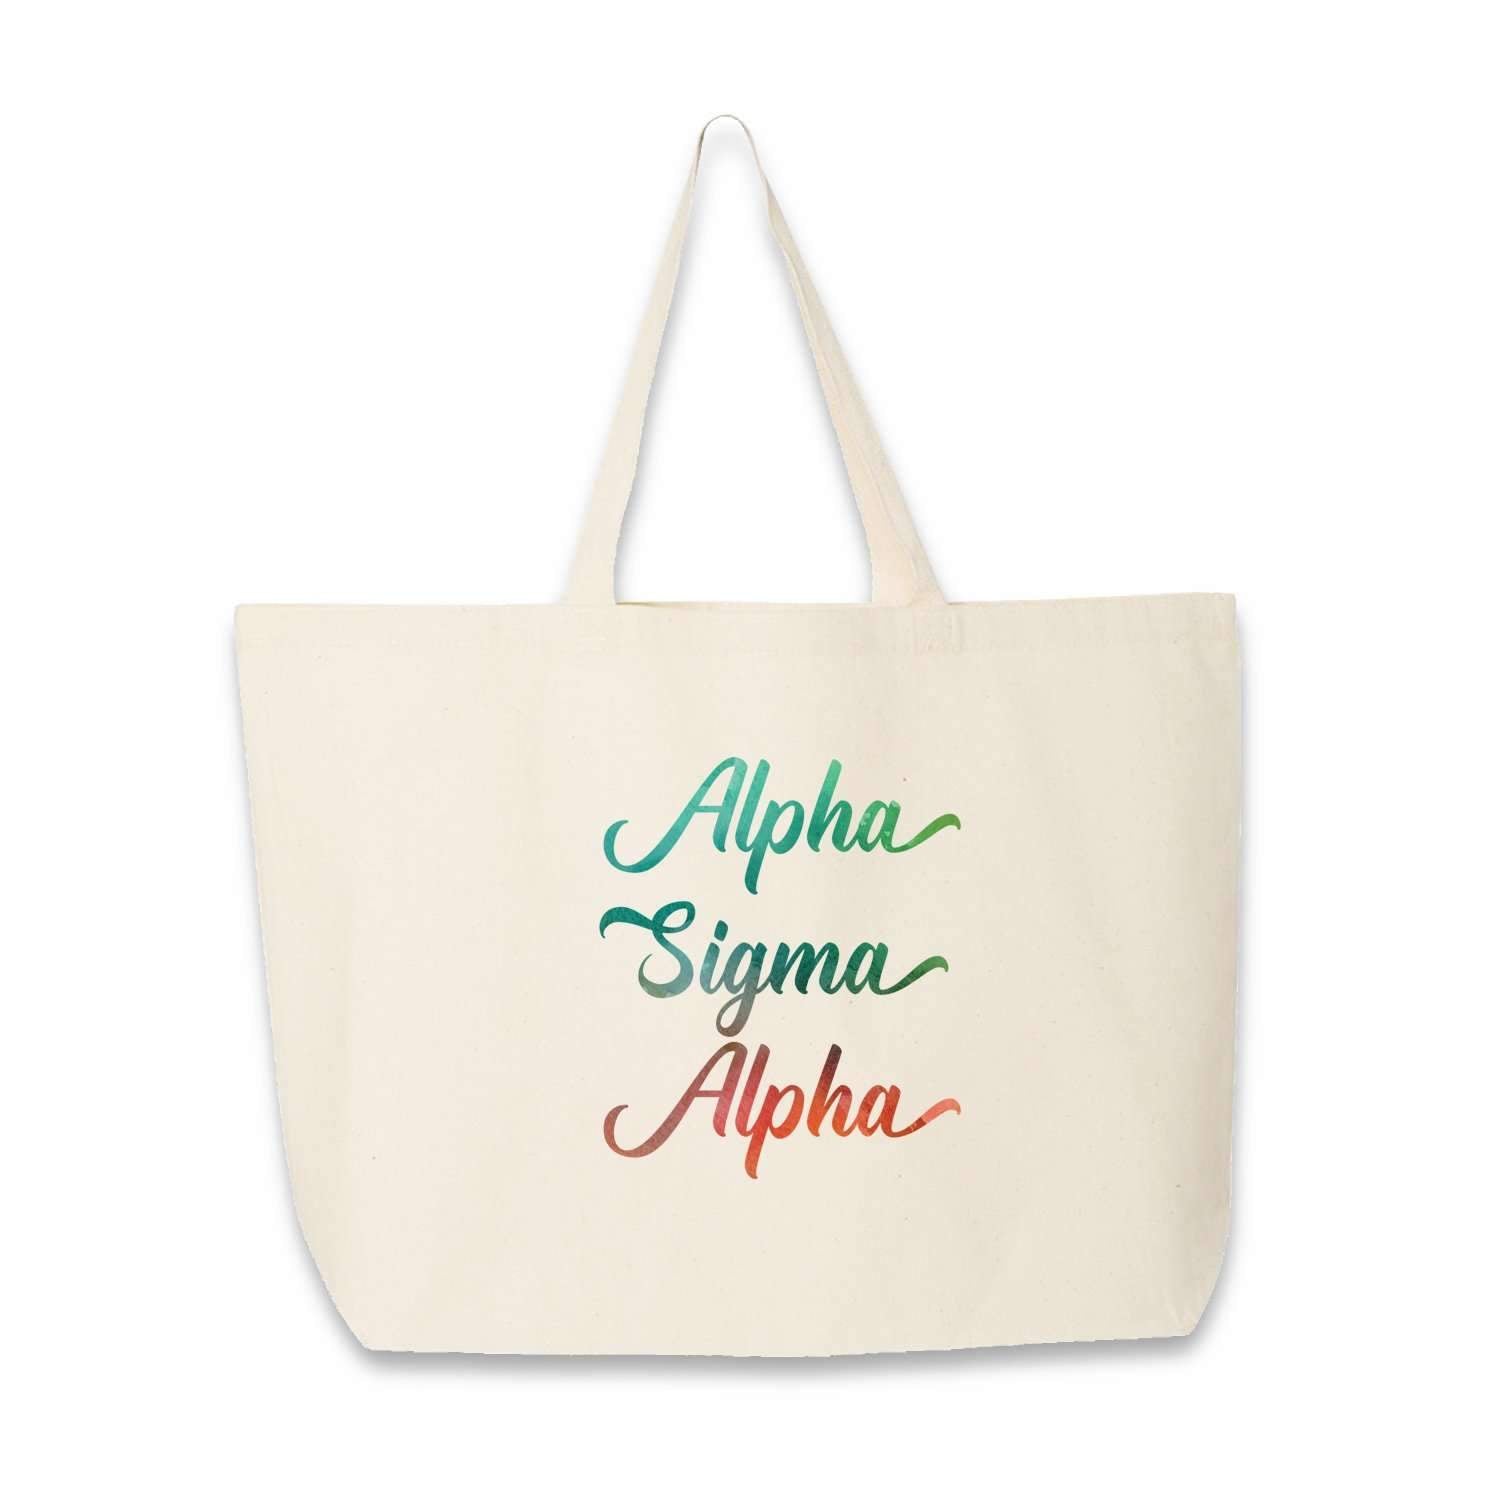 Alpha Sigma Alpha sorority name custom printed on canvas tote bag